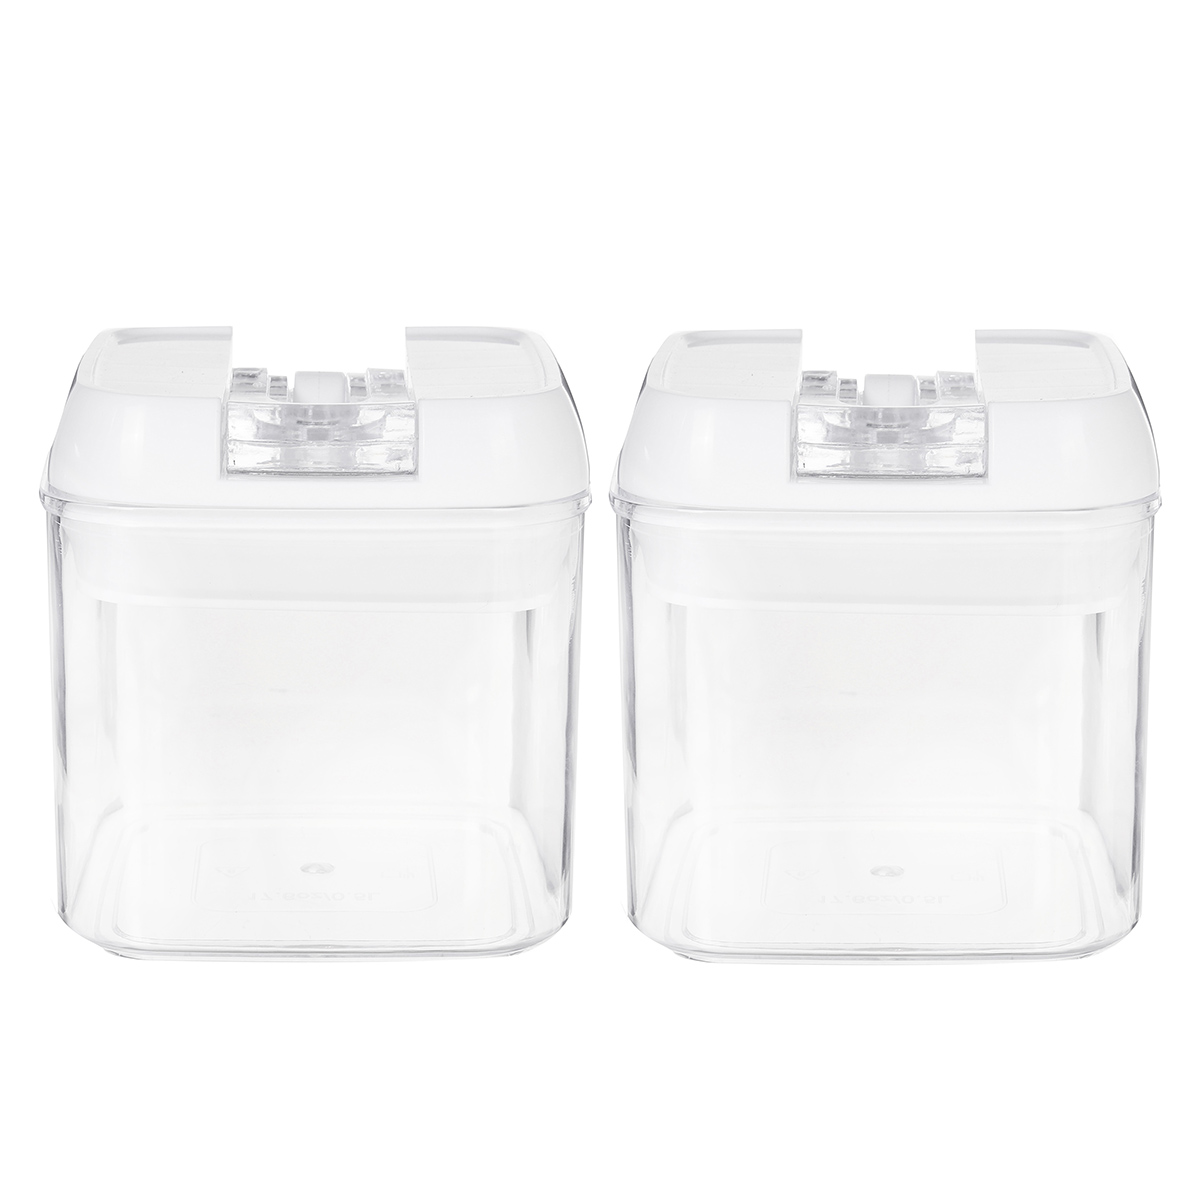 6pcs-Airtight-Refrigerator-Food-Container-Storage-with-Lock-Lids-Plastic-Transparent-Multigrain-Cont-1752734-19